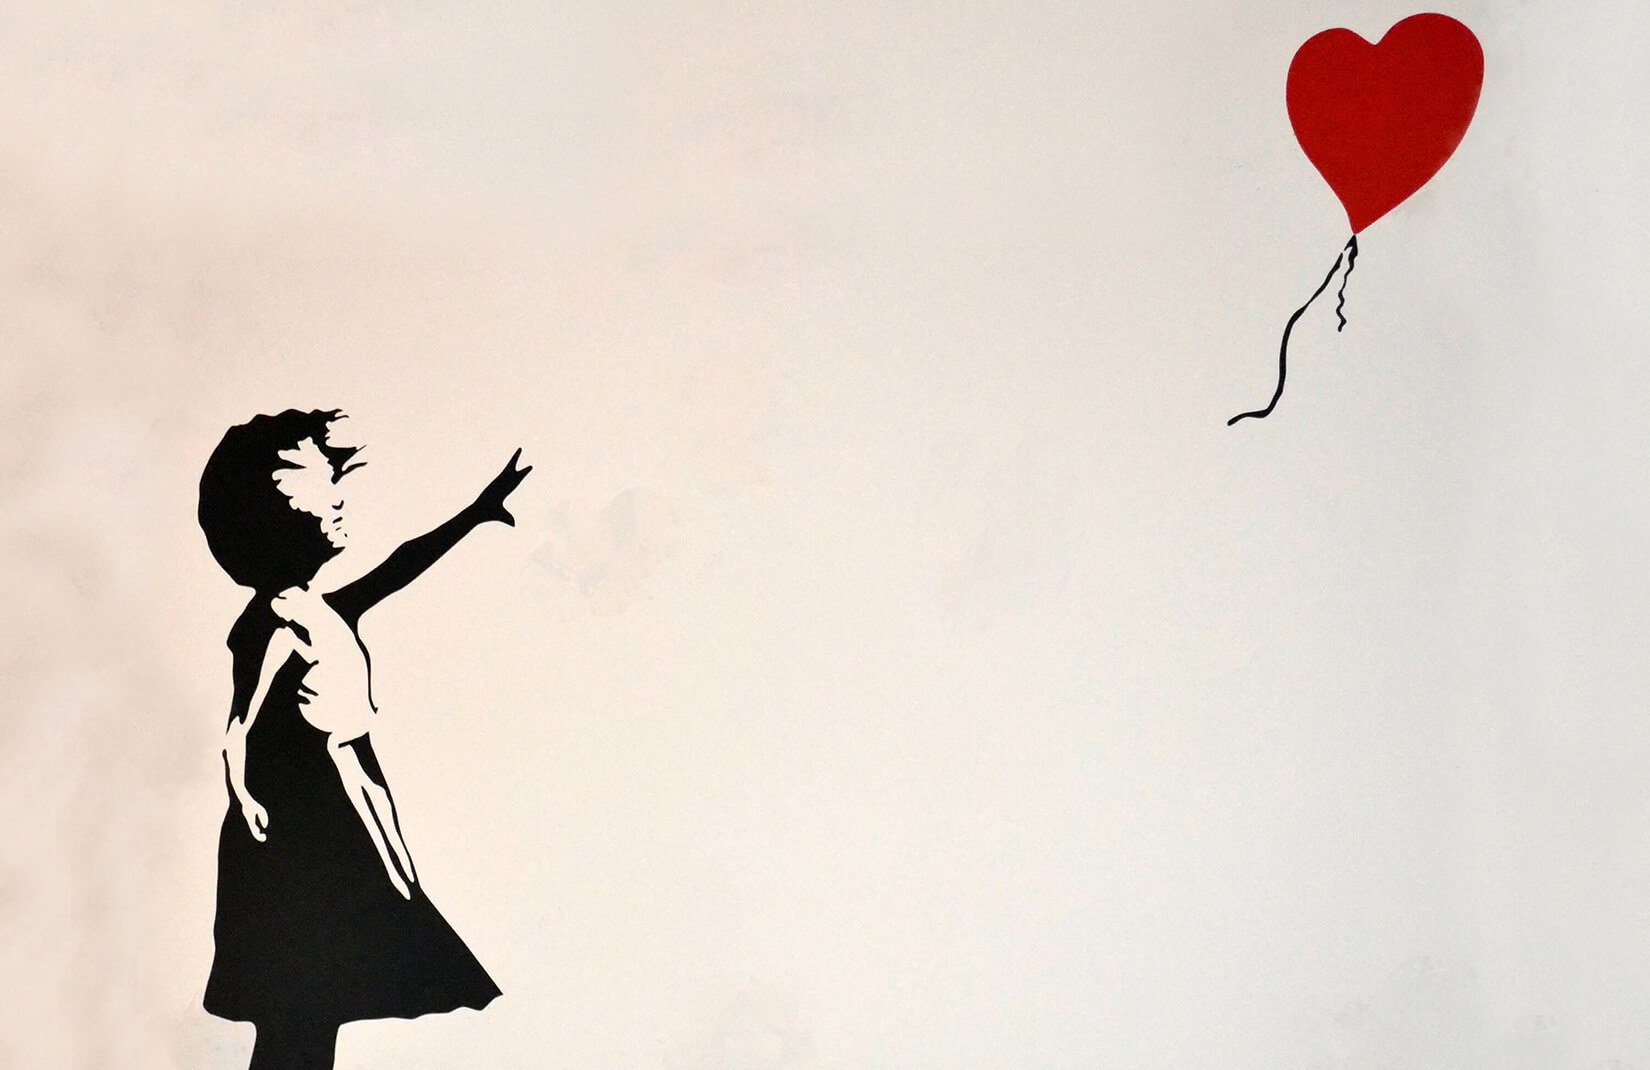 banksy wallpaper,red,balloon,standing,silhouette,illustration